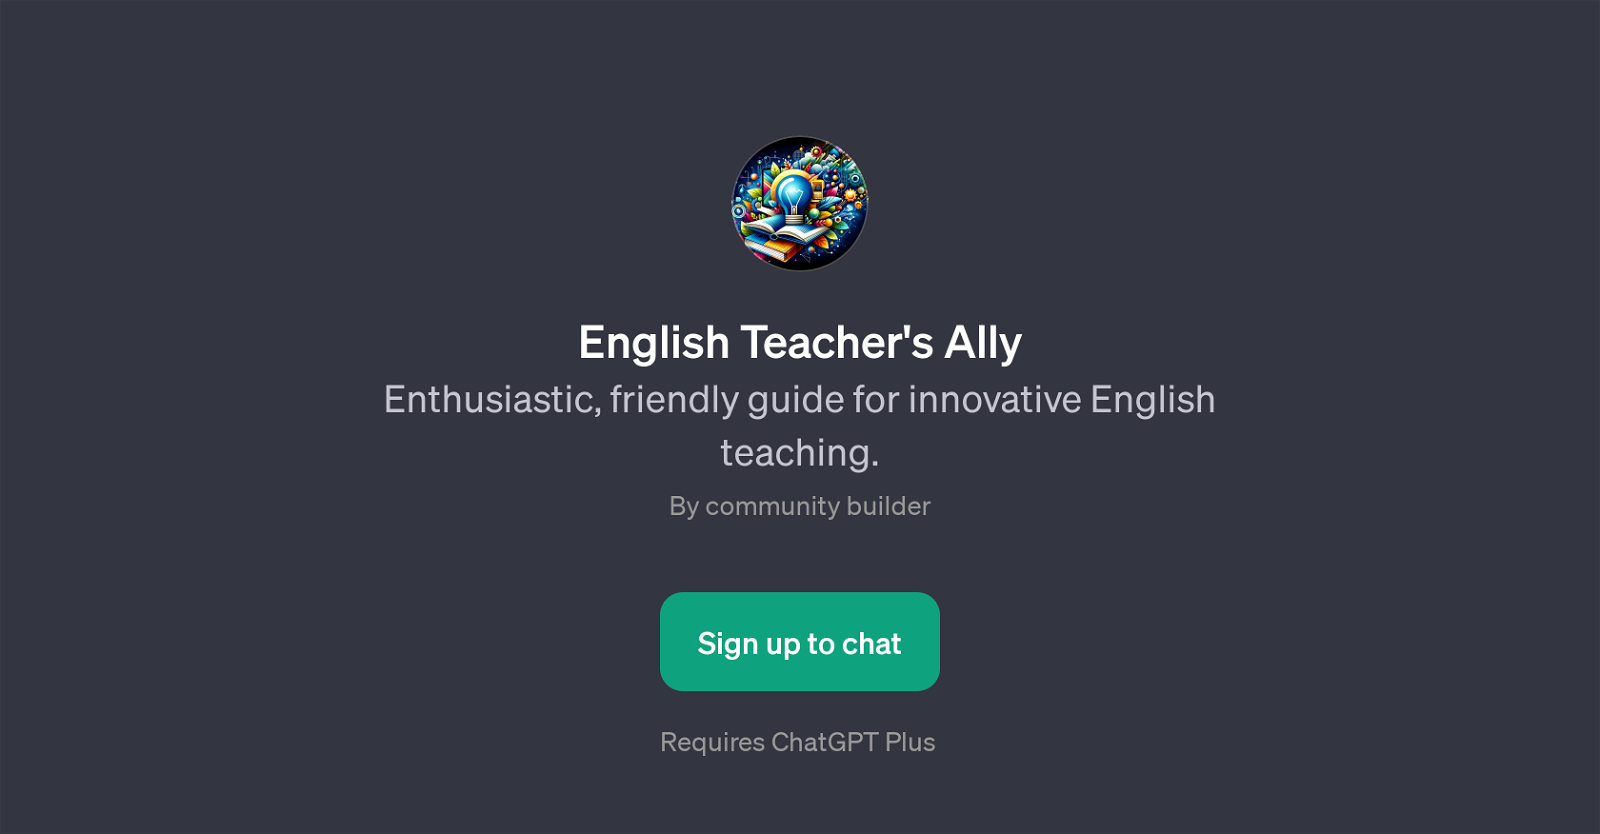 English Teacher's Ally website